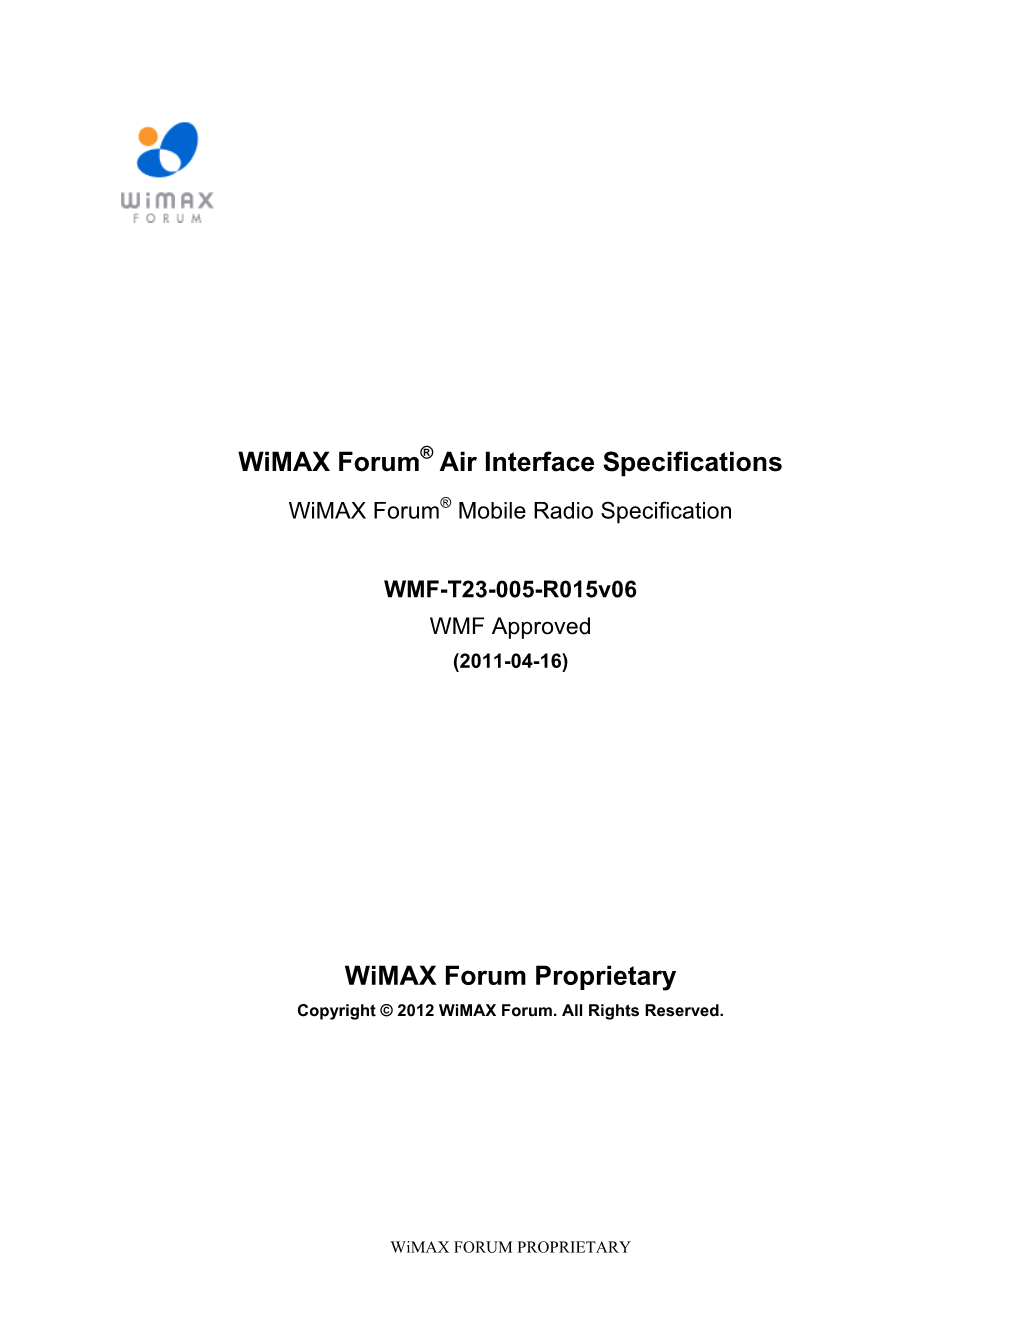 Wimax Forum® Mobile Radio Specification